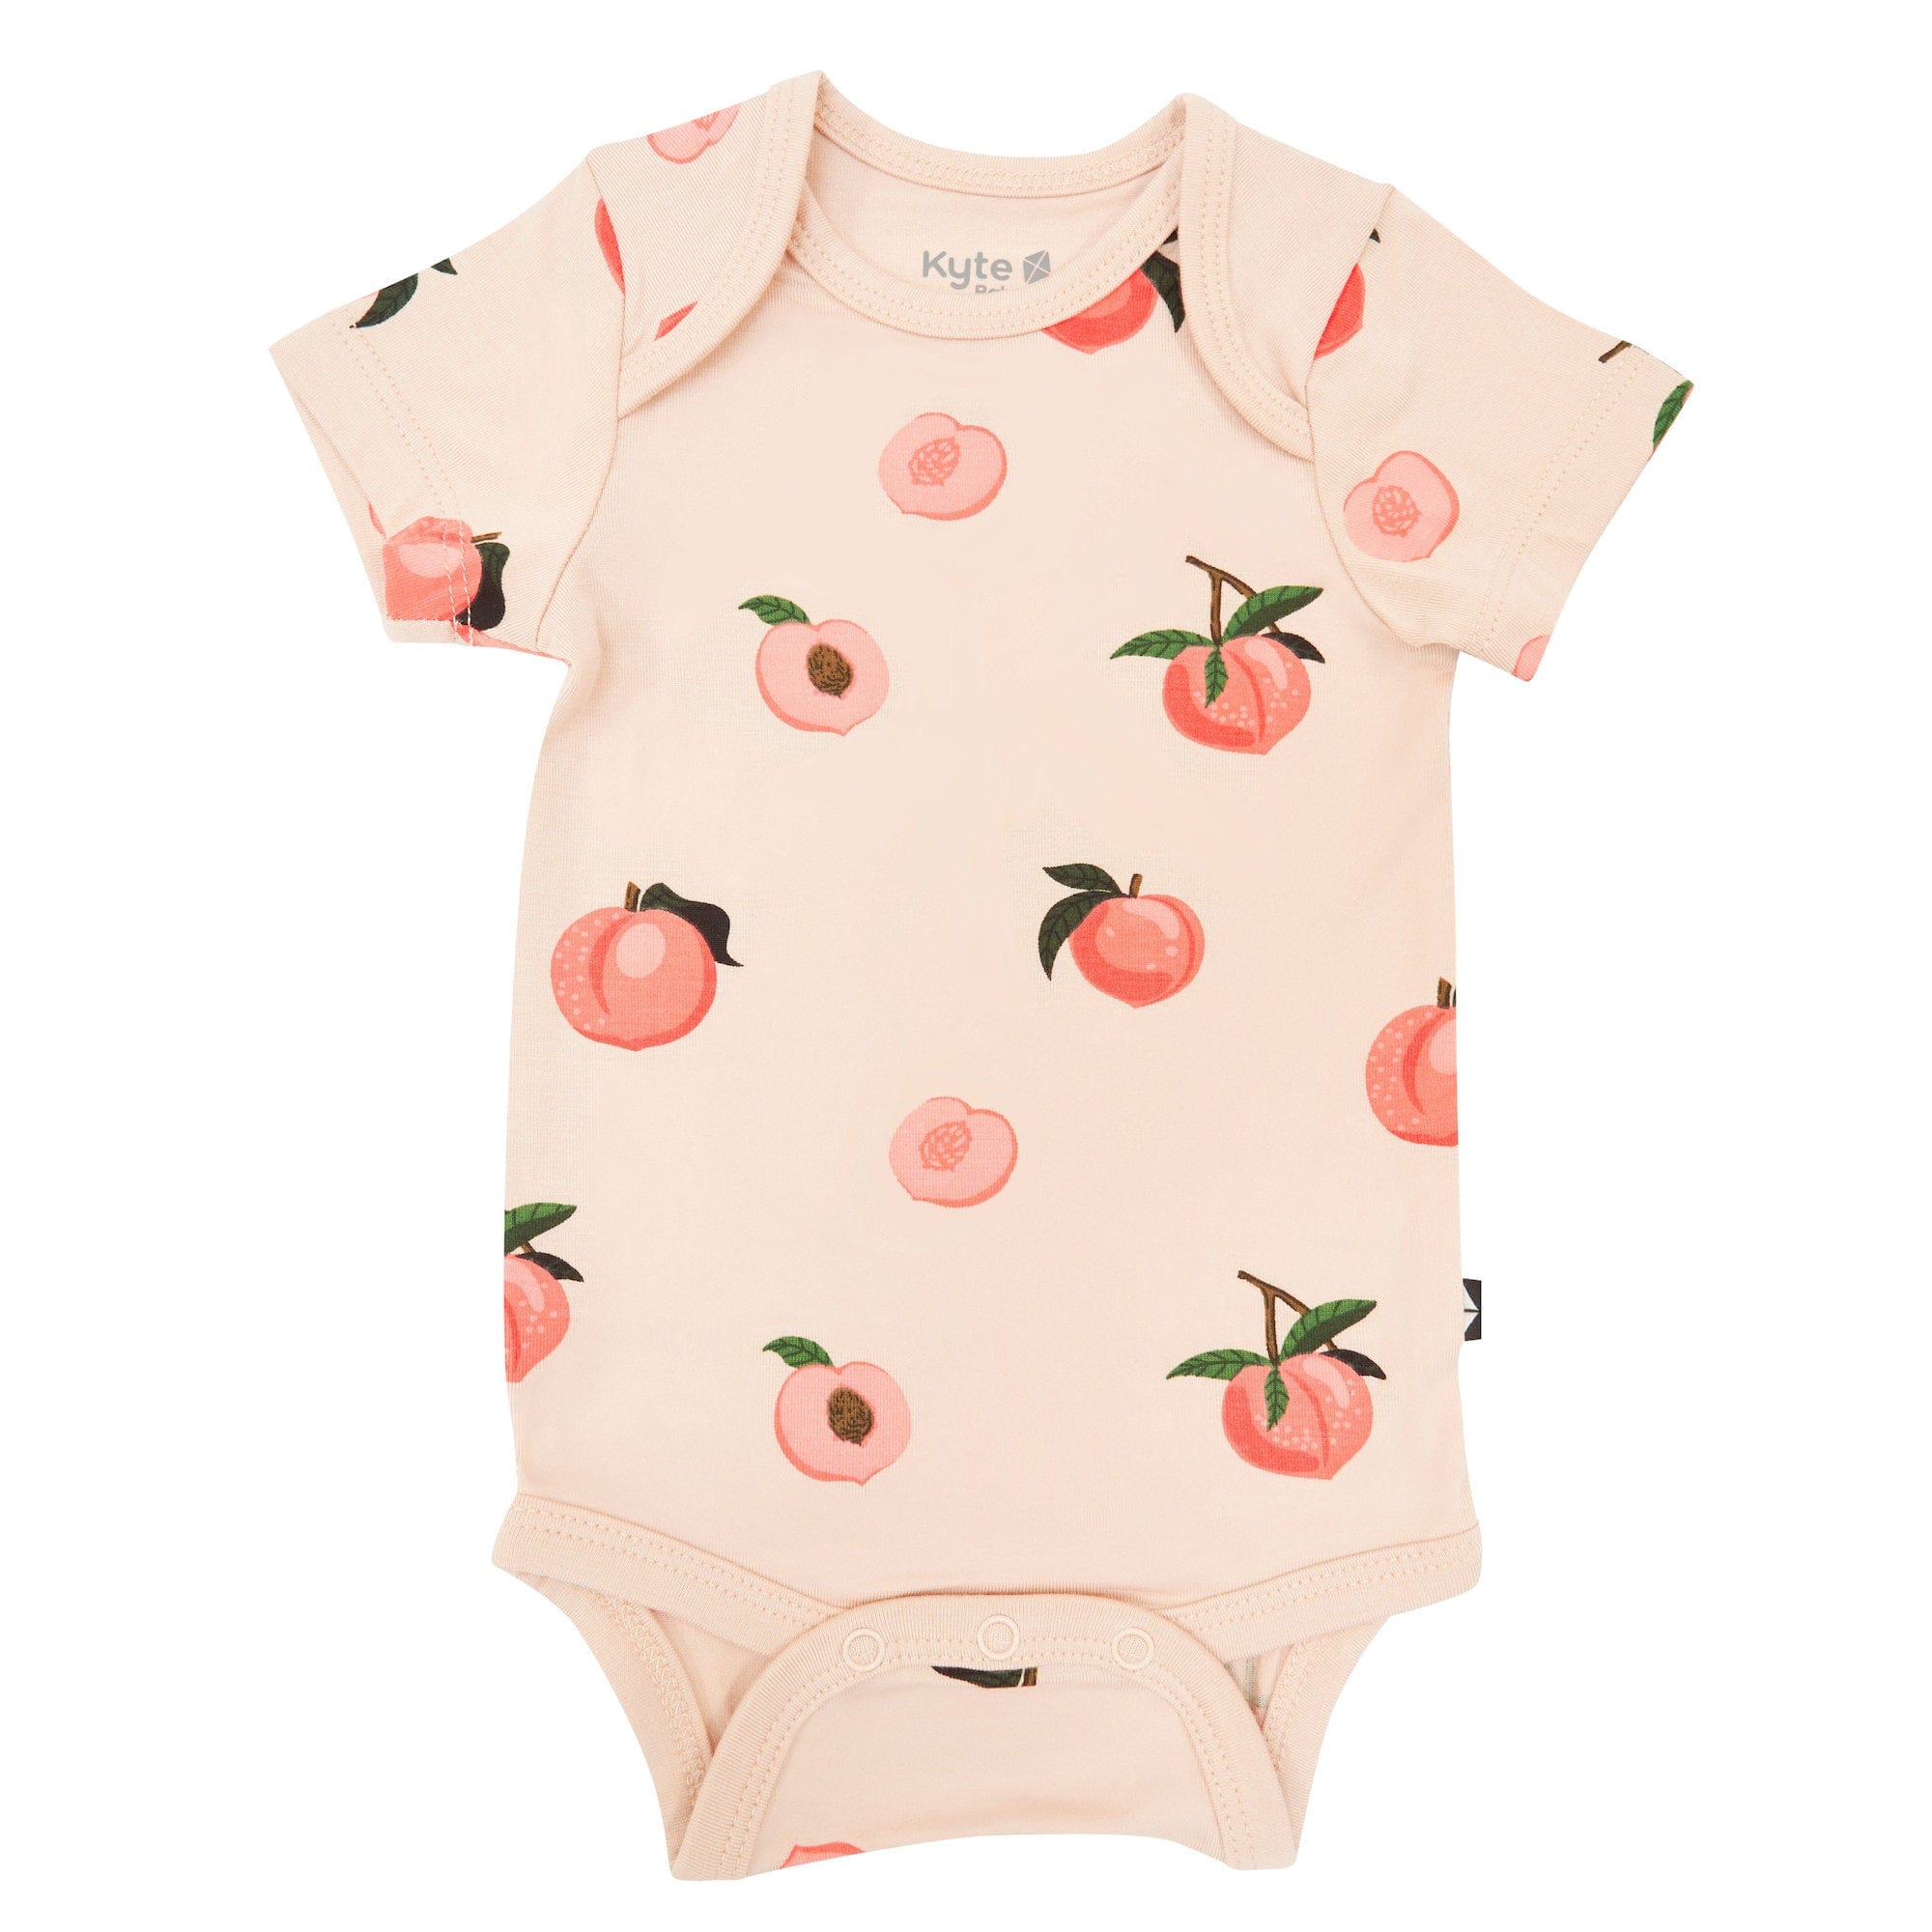 Kyte Baby Short Sleeve Bodysuits Bodysuit in Peach